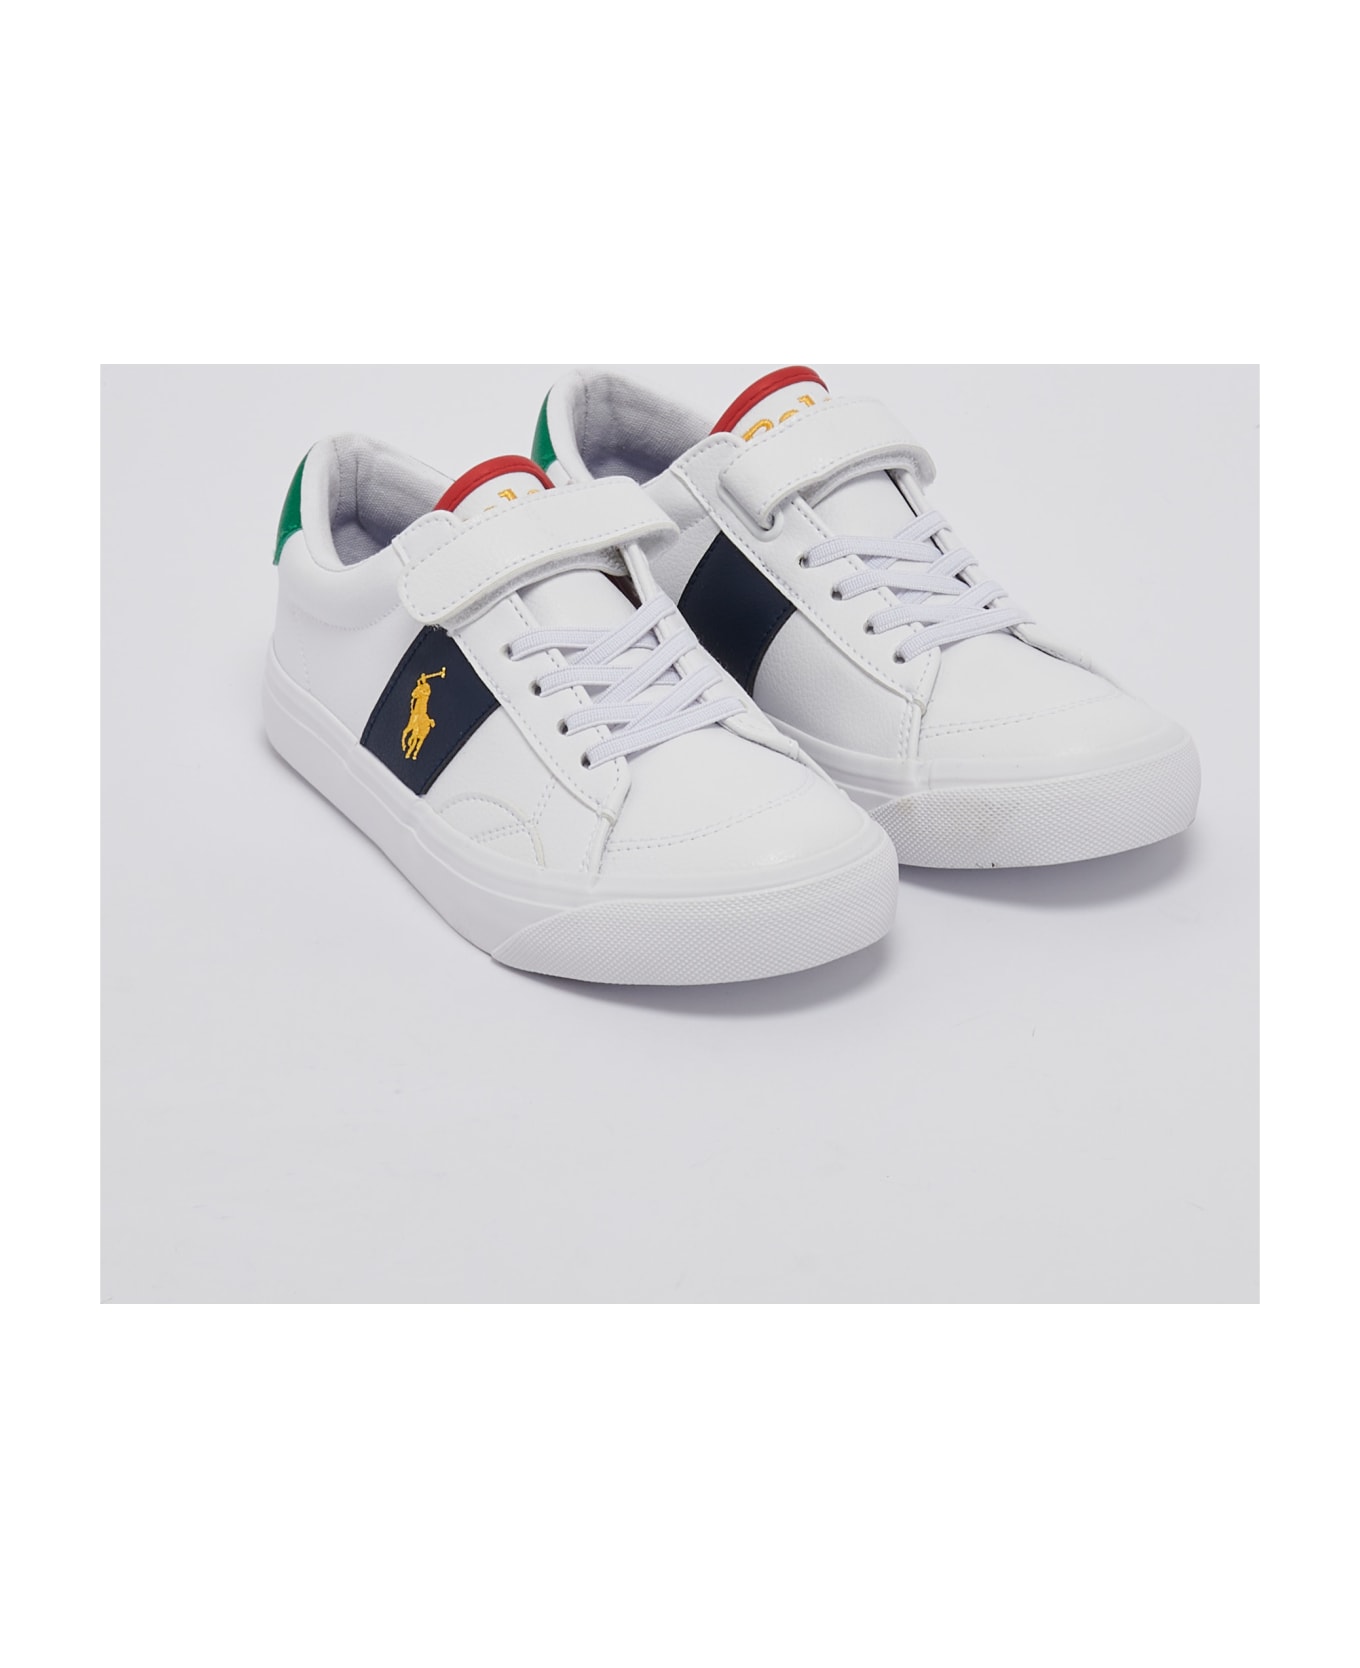 Polo Ralph Lauren Ryley Sneakers Sneaker - B.CO-VERDE シューズ